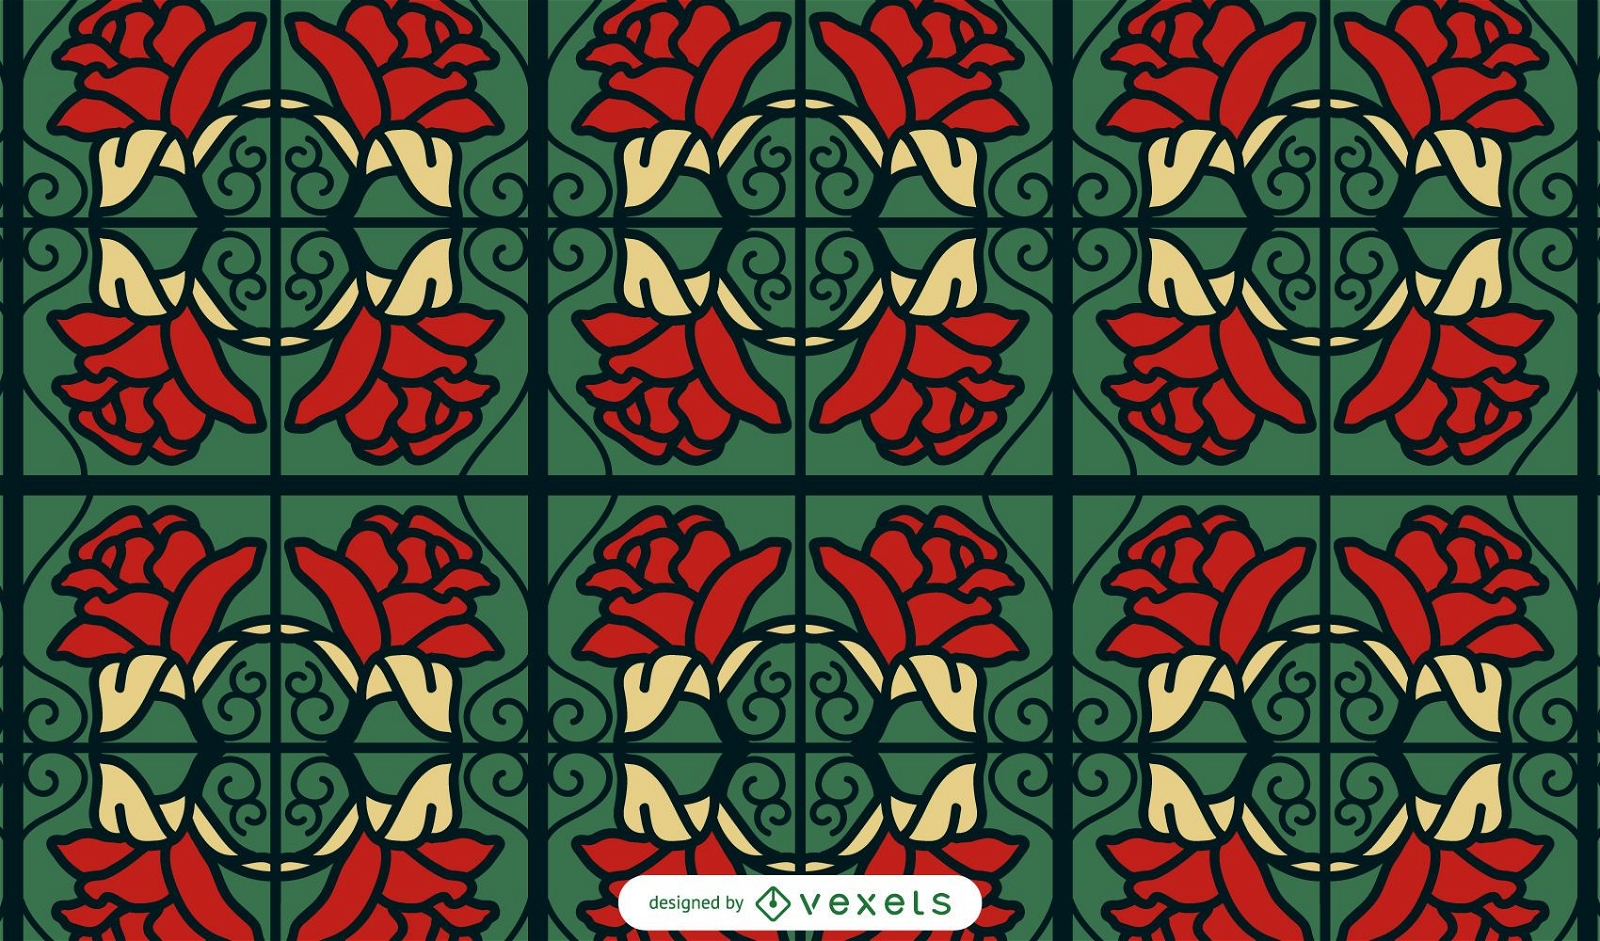 Red roses swirls pattern design